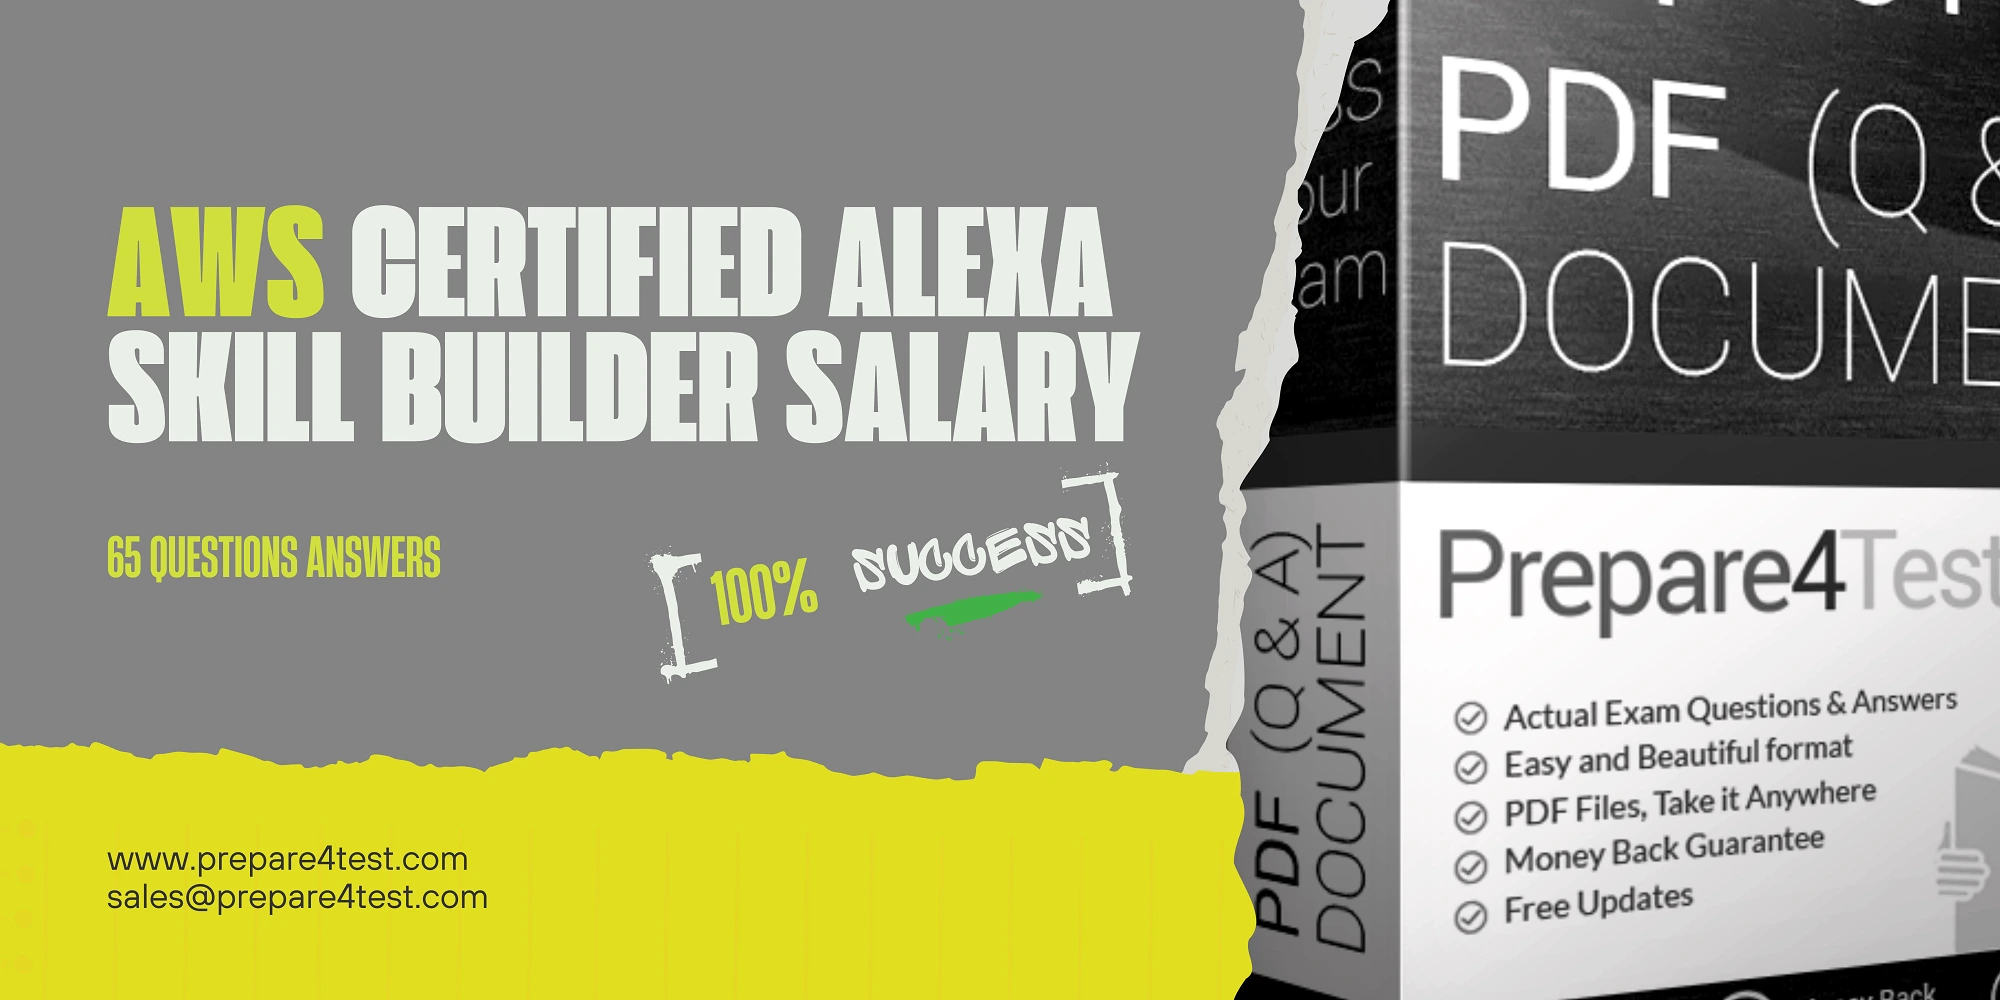 AWS Certified Alexa Skill Builder Salary promotion